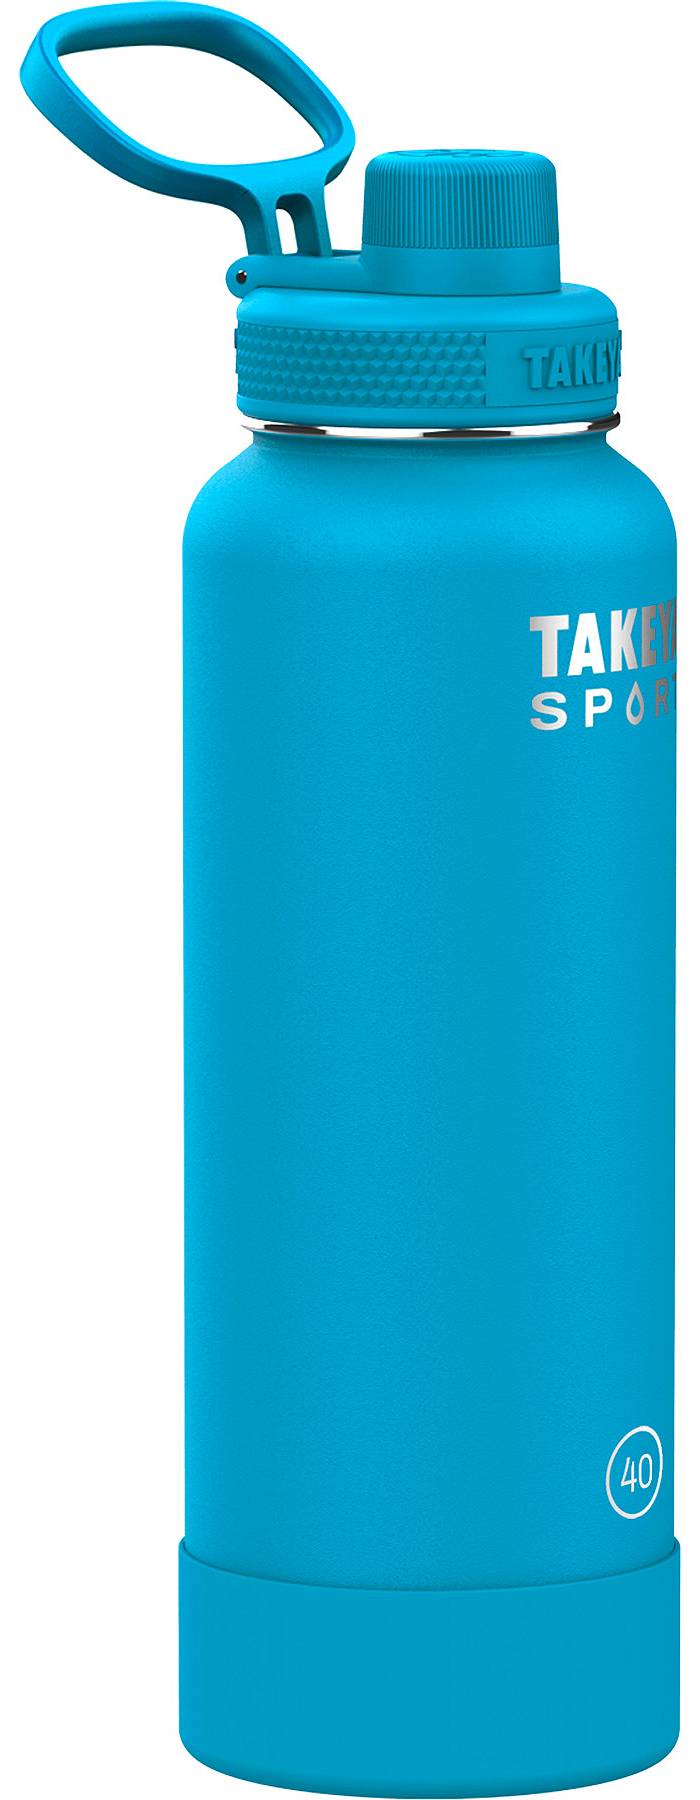 Takeya Sport 40 oz. Water Bottle with Spout Lid, Championship Blue